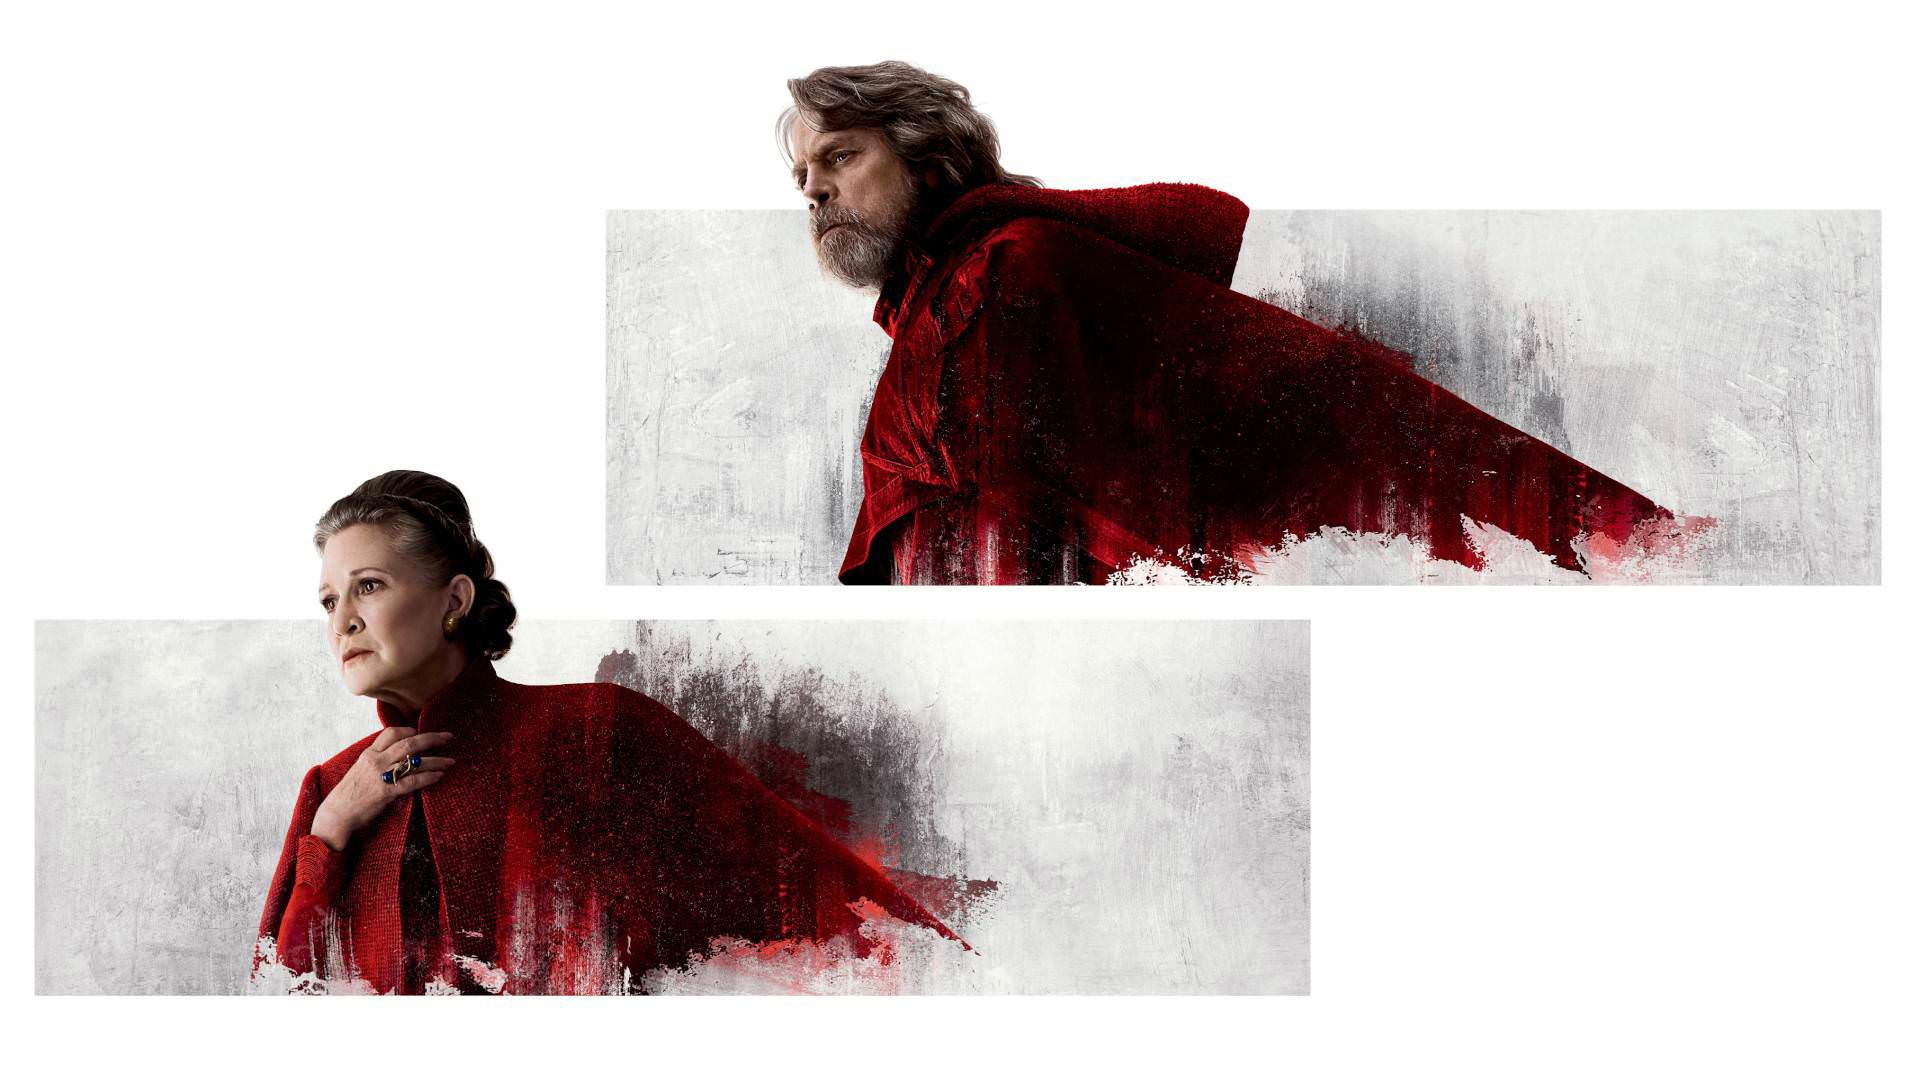 Princess Leia: One of the more popular Star Wars characters, Luke Skywalker's twin sister. 1920x1080 Full HD Wallpaper.